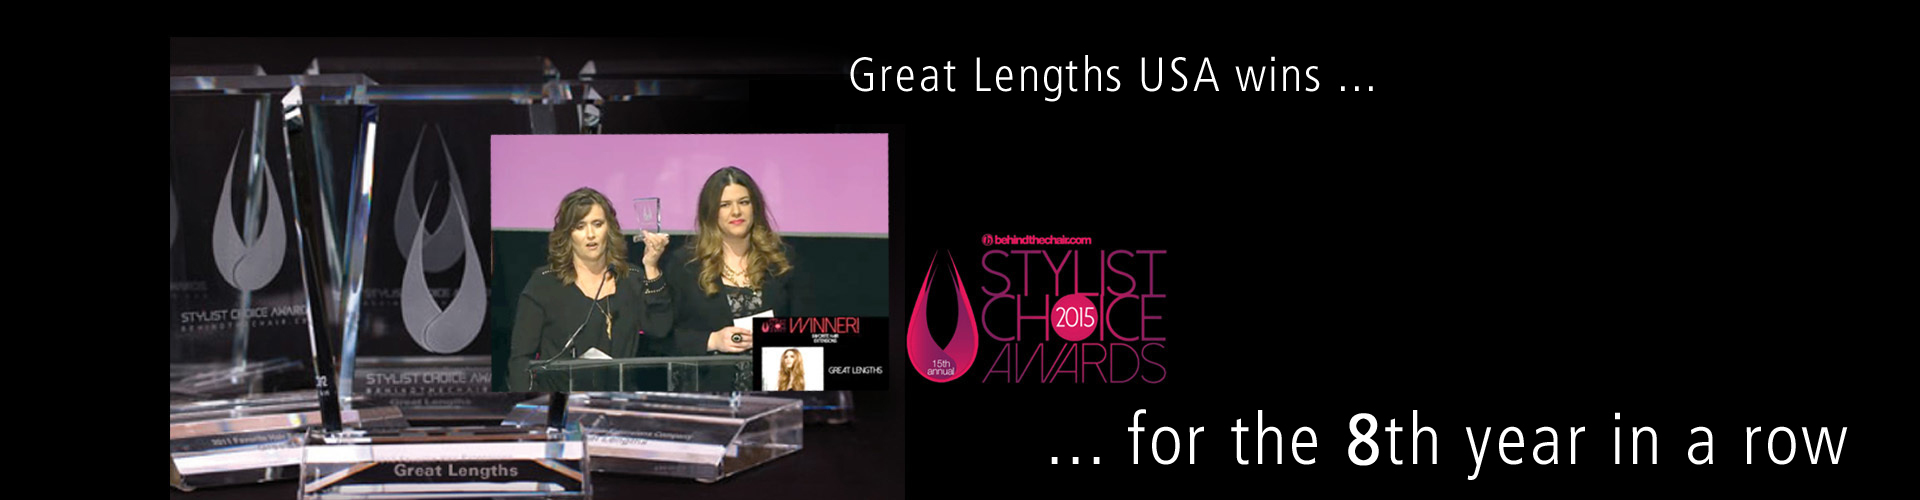 Stylist Choice Awards 2015 - Great Lengths USA gewinnt zum 8. Mal in Folge (© Great Lengths)